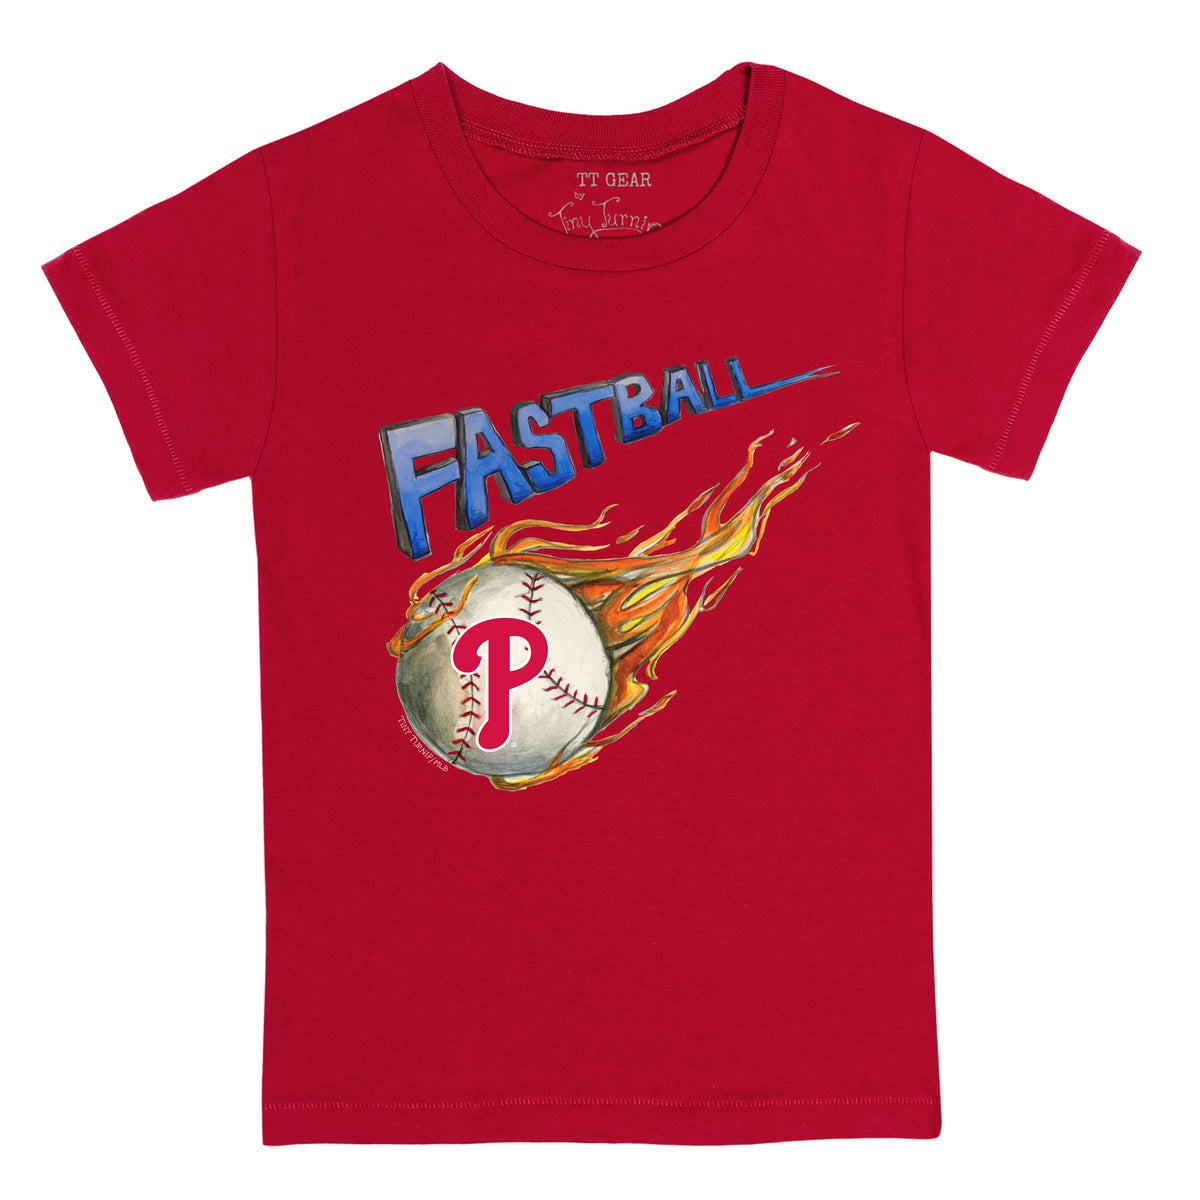 Philadelphia Phillies Fastball Tee Shirt